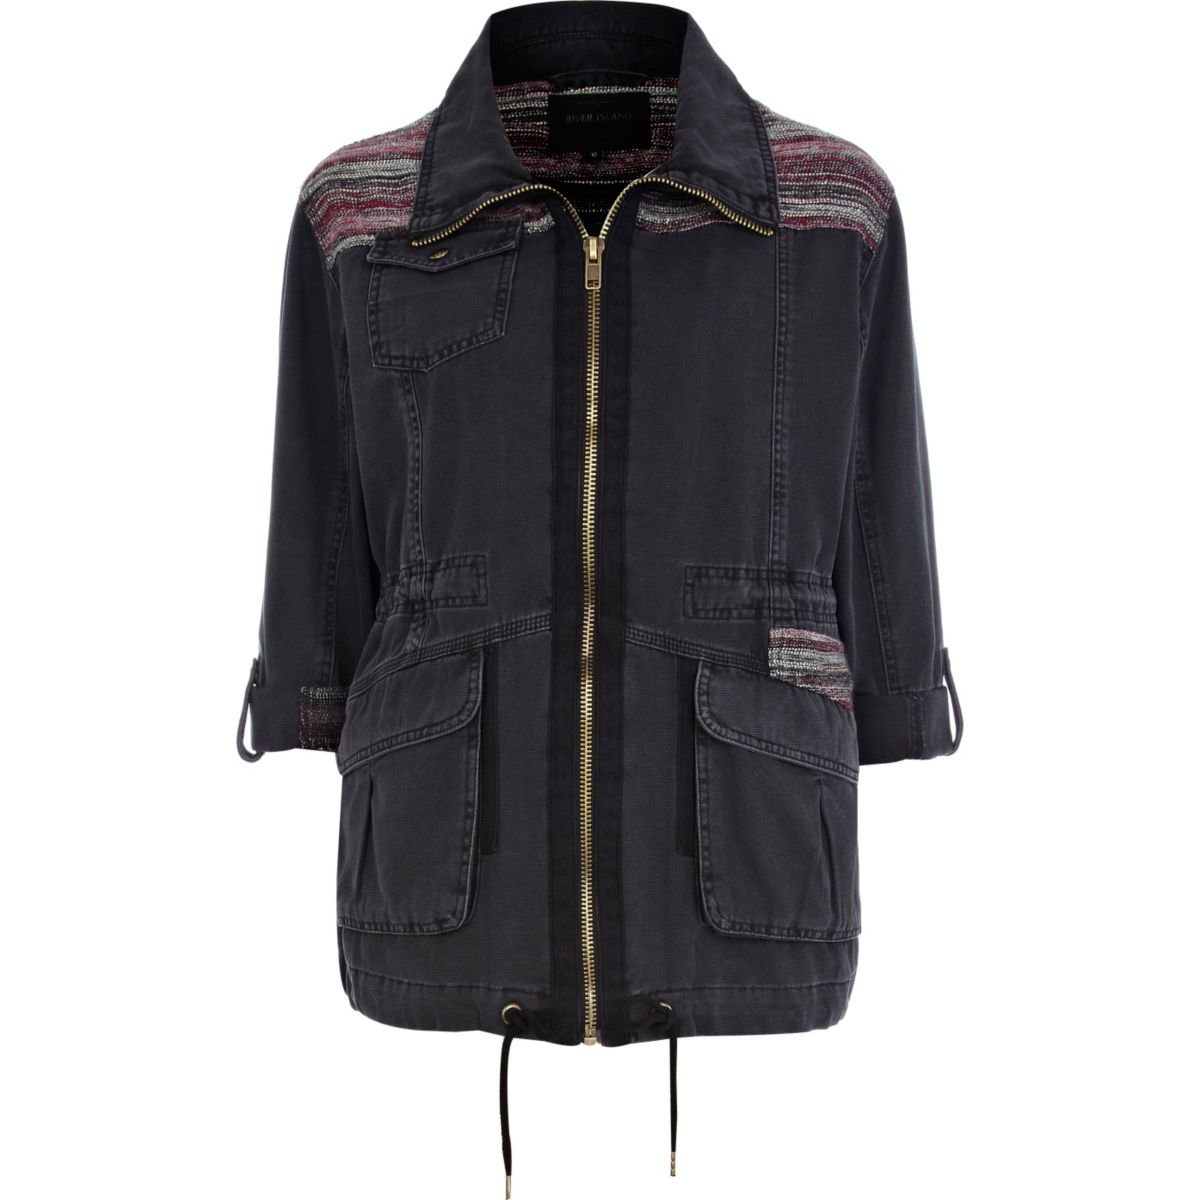 Black jacquard panel army jacket - Coats & Jackets - Sale - women